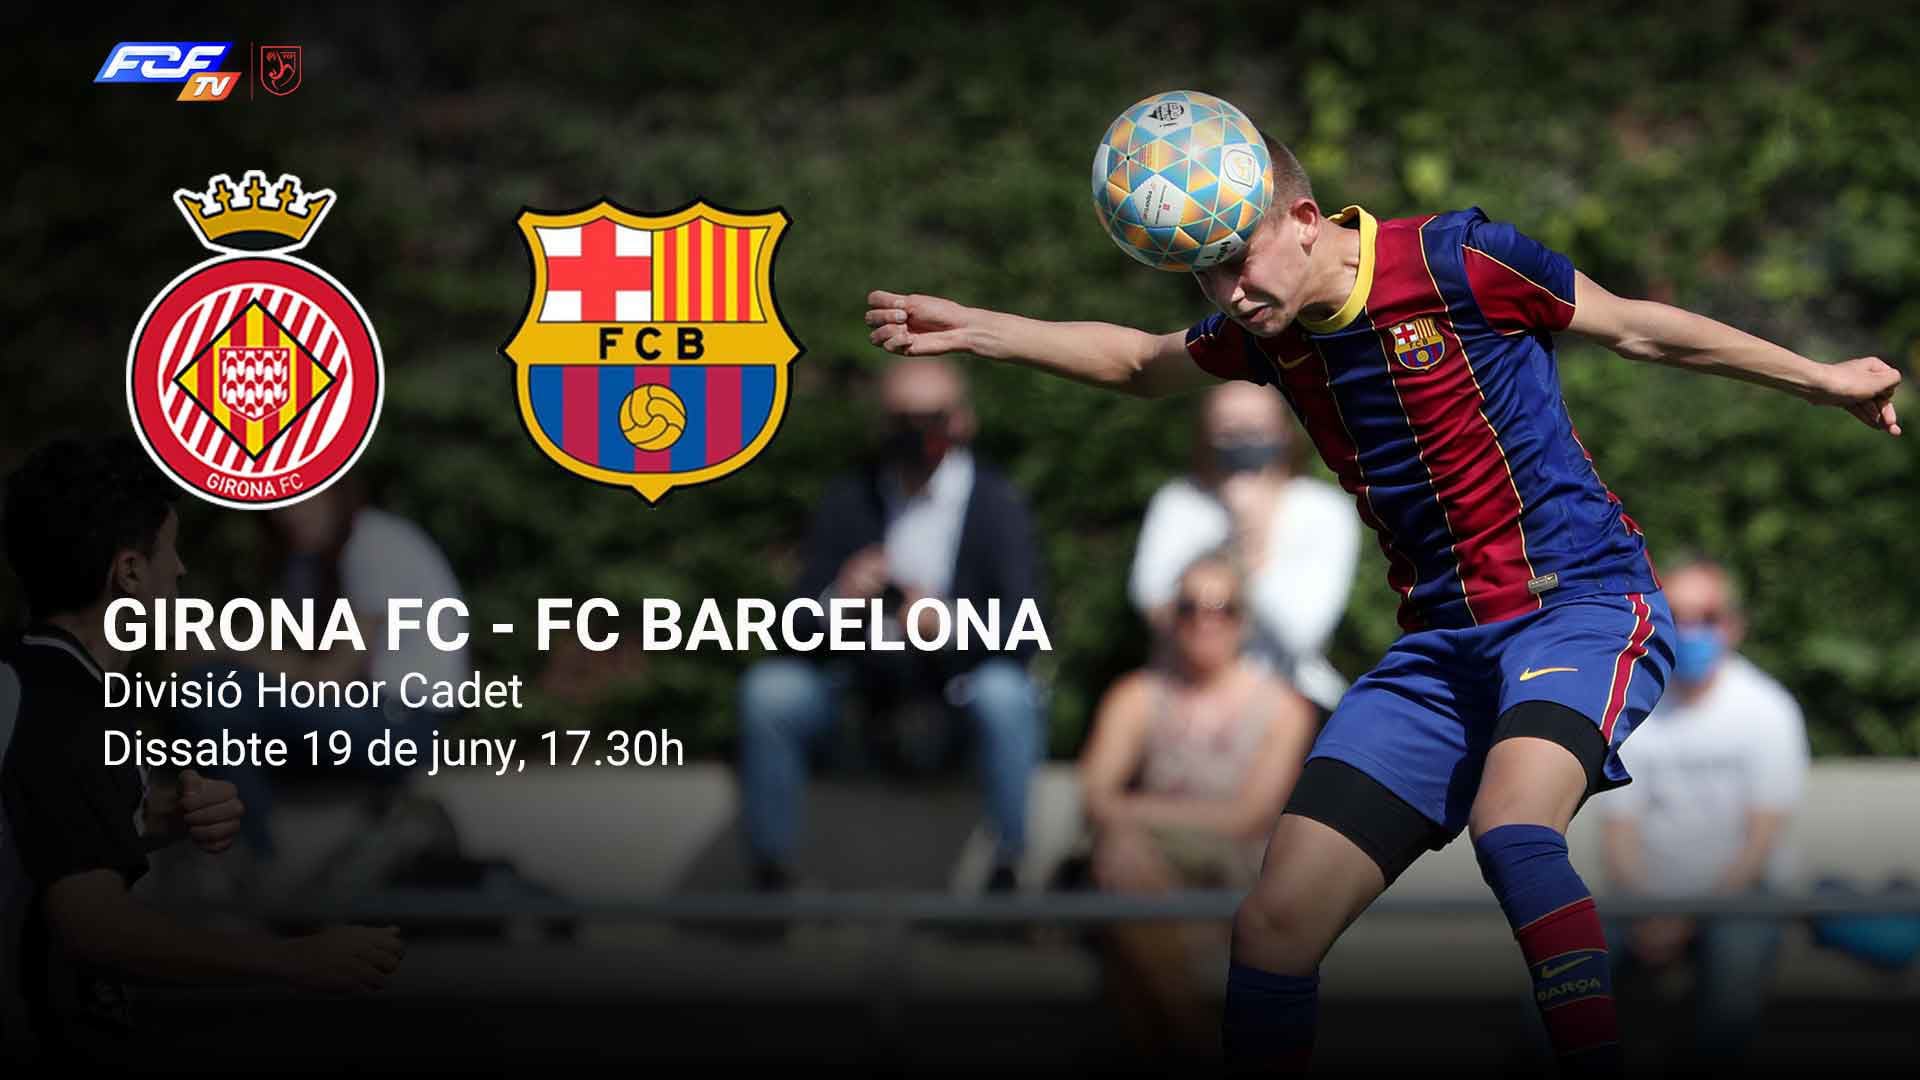 GIRONA FC - FC BARCELONA on Vimeo